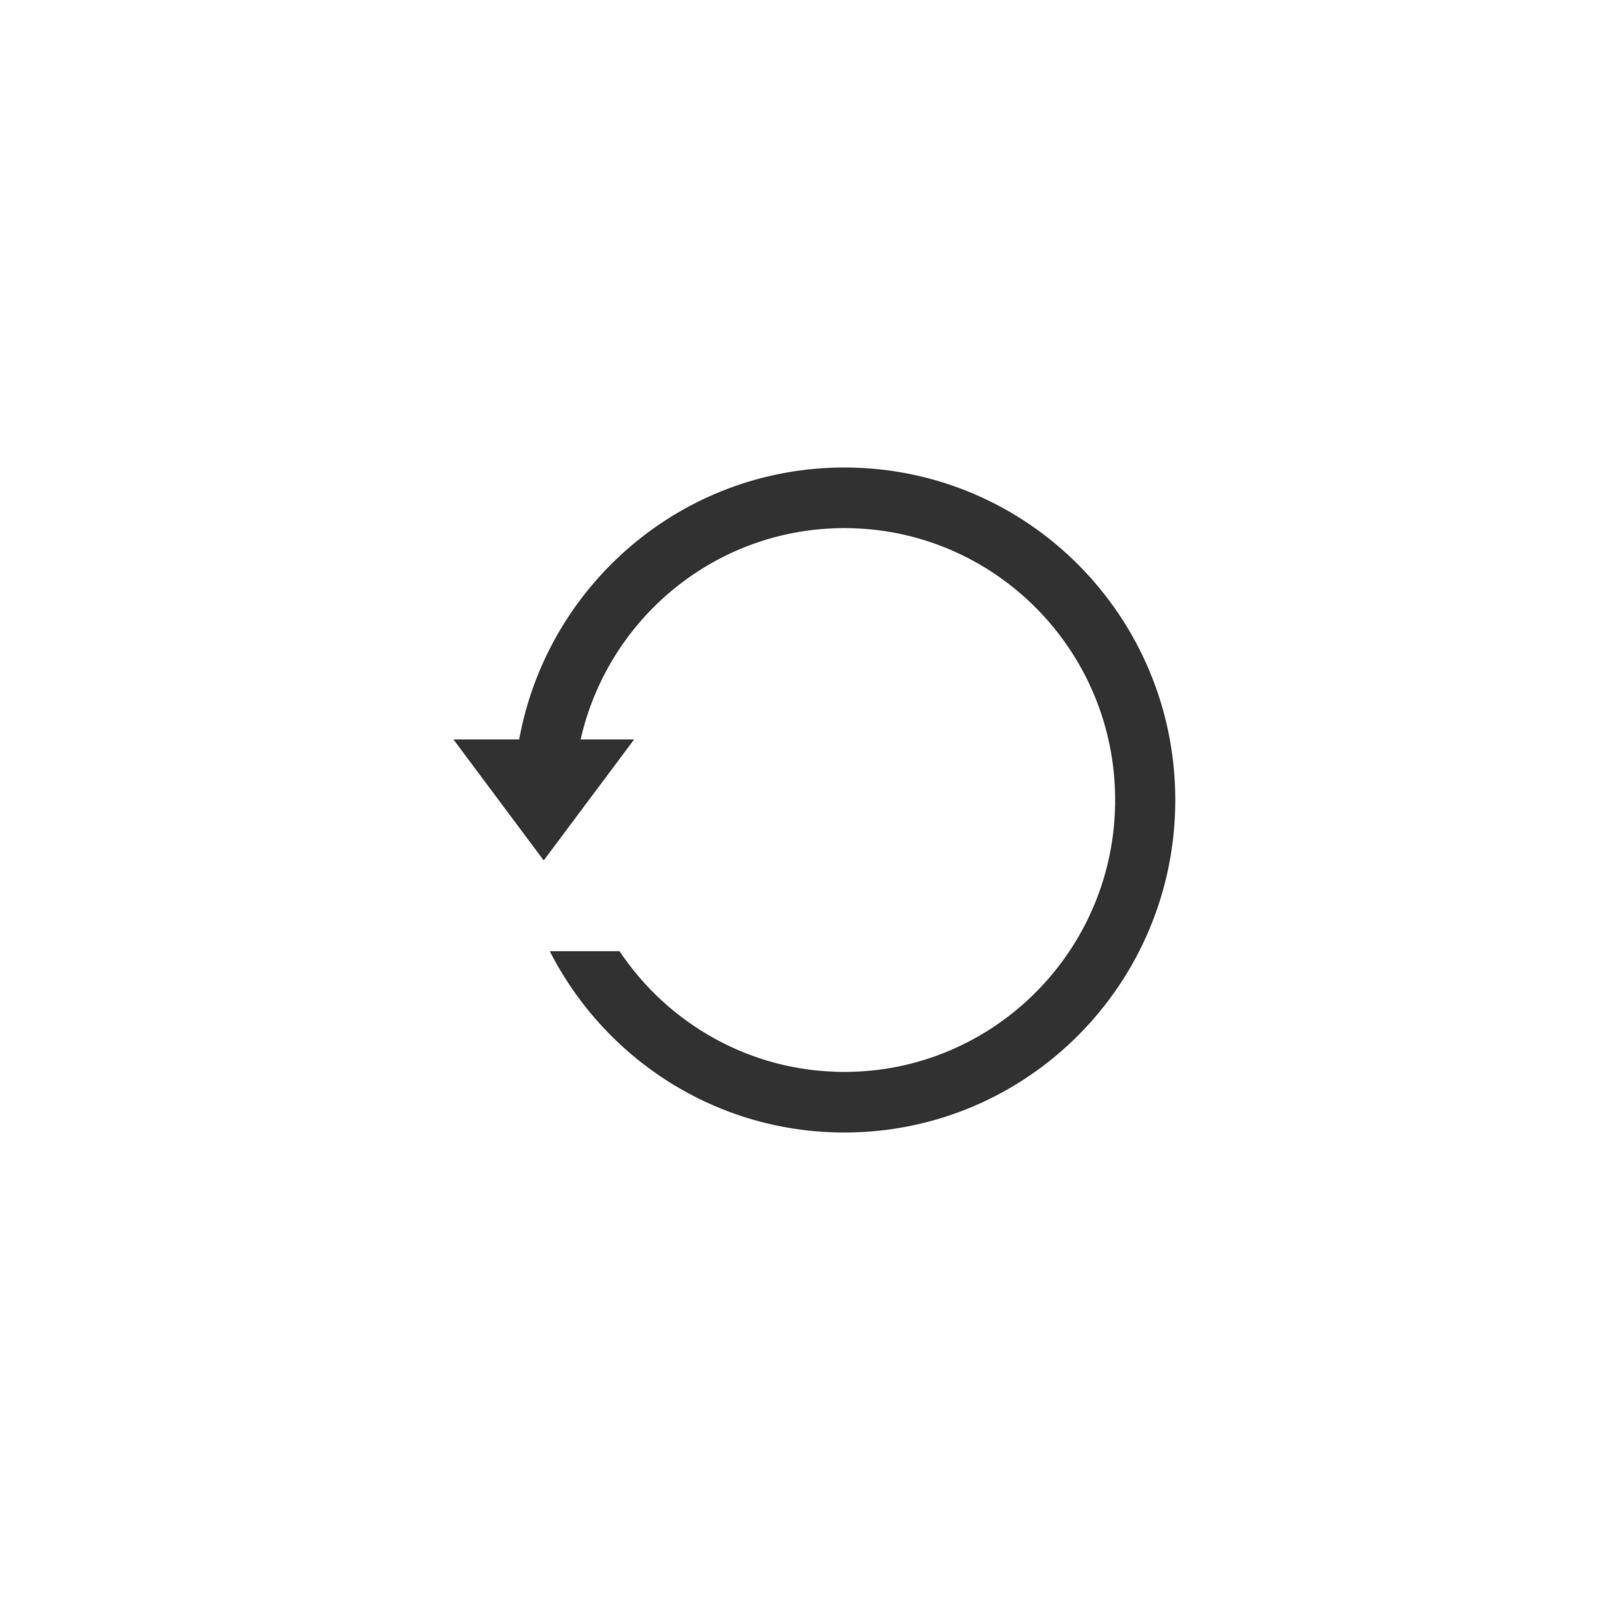 Circle arrow back, Undo icon, back arrow symbol. Stock Vector illustration isolated